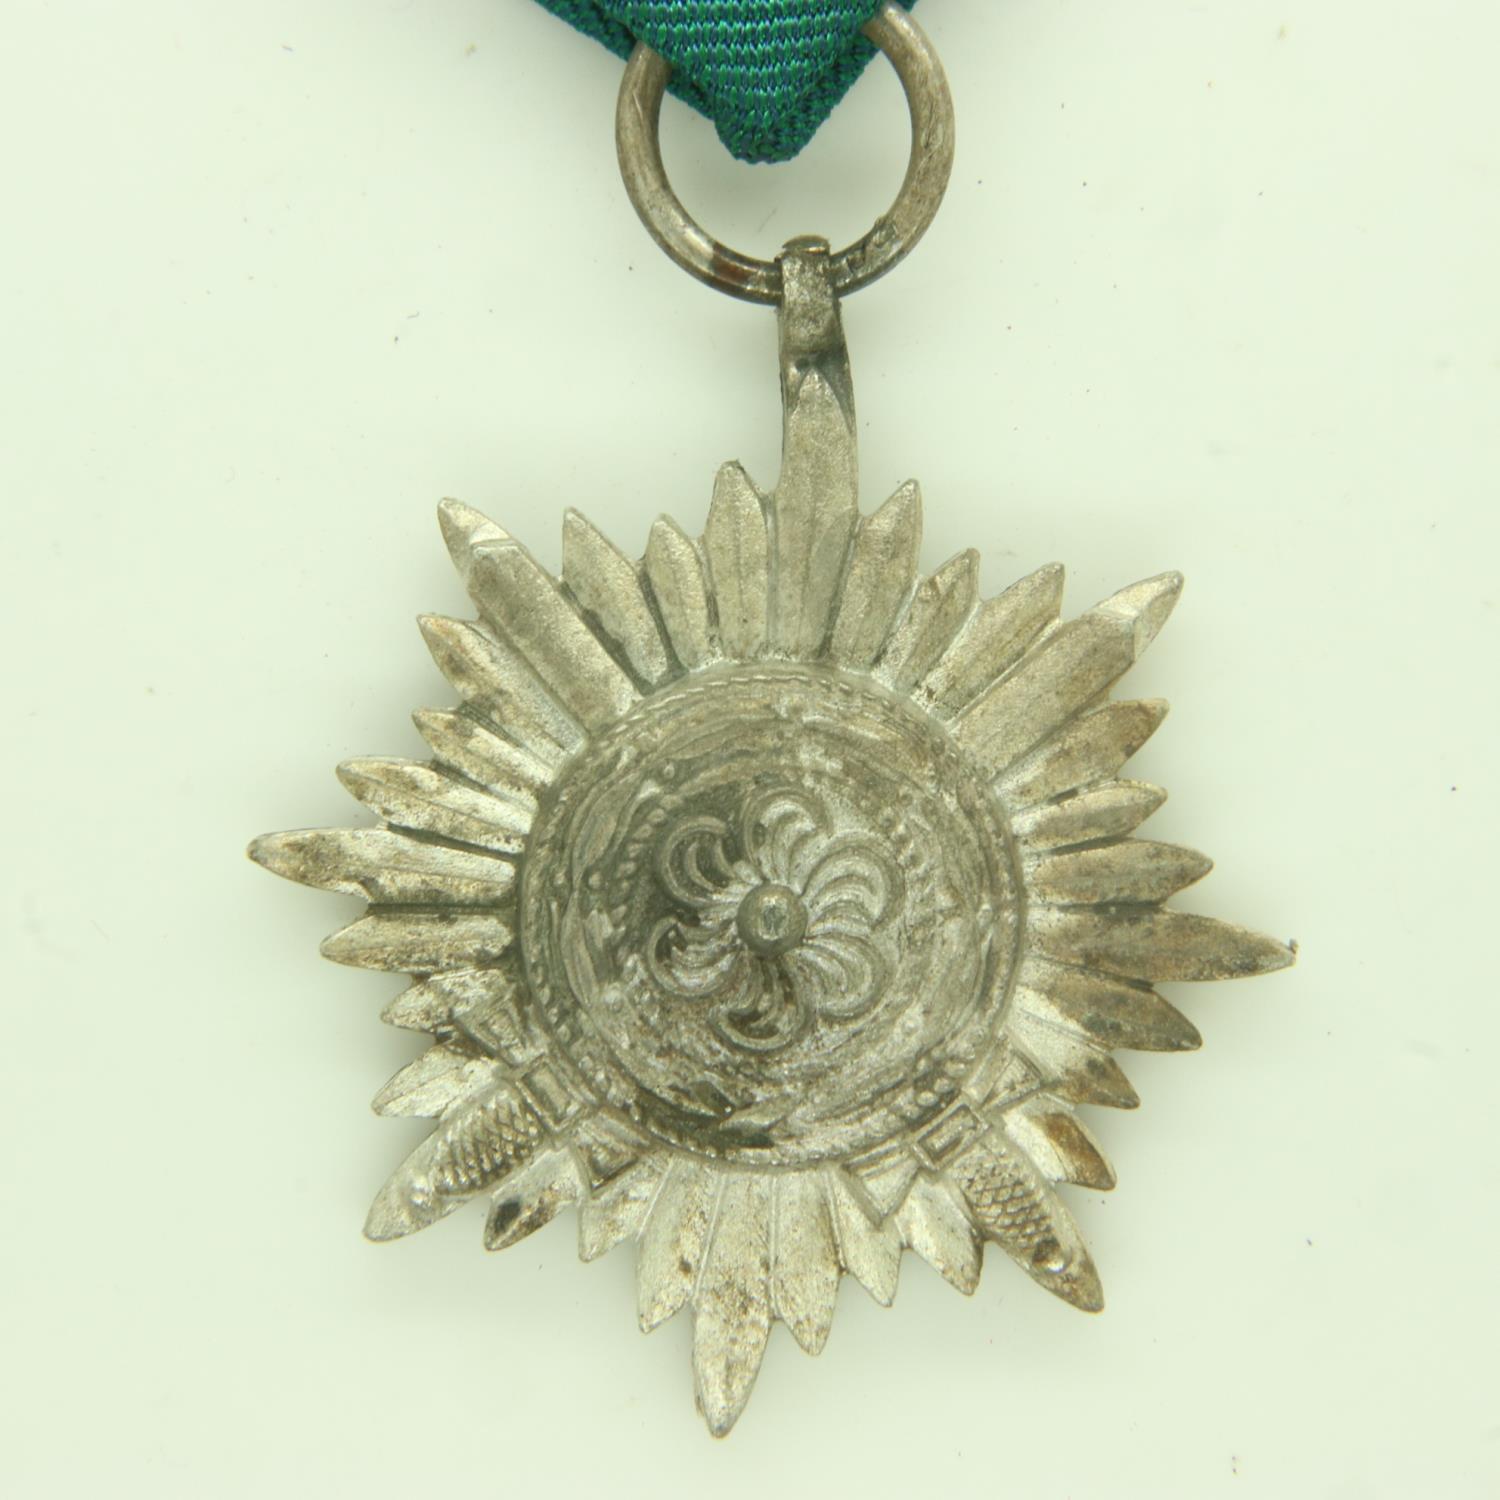 WWII German/Eastern Volunteers/Ostvolk Medal. UK P&P Group 0 (£6+VAT for the first lot and £1+VAT